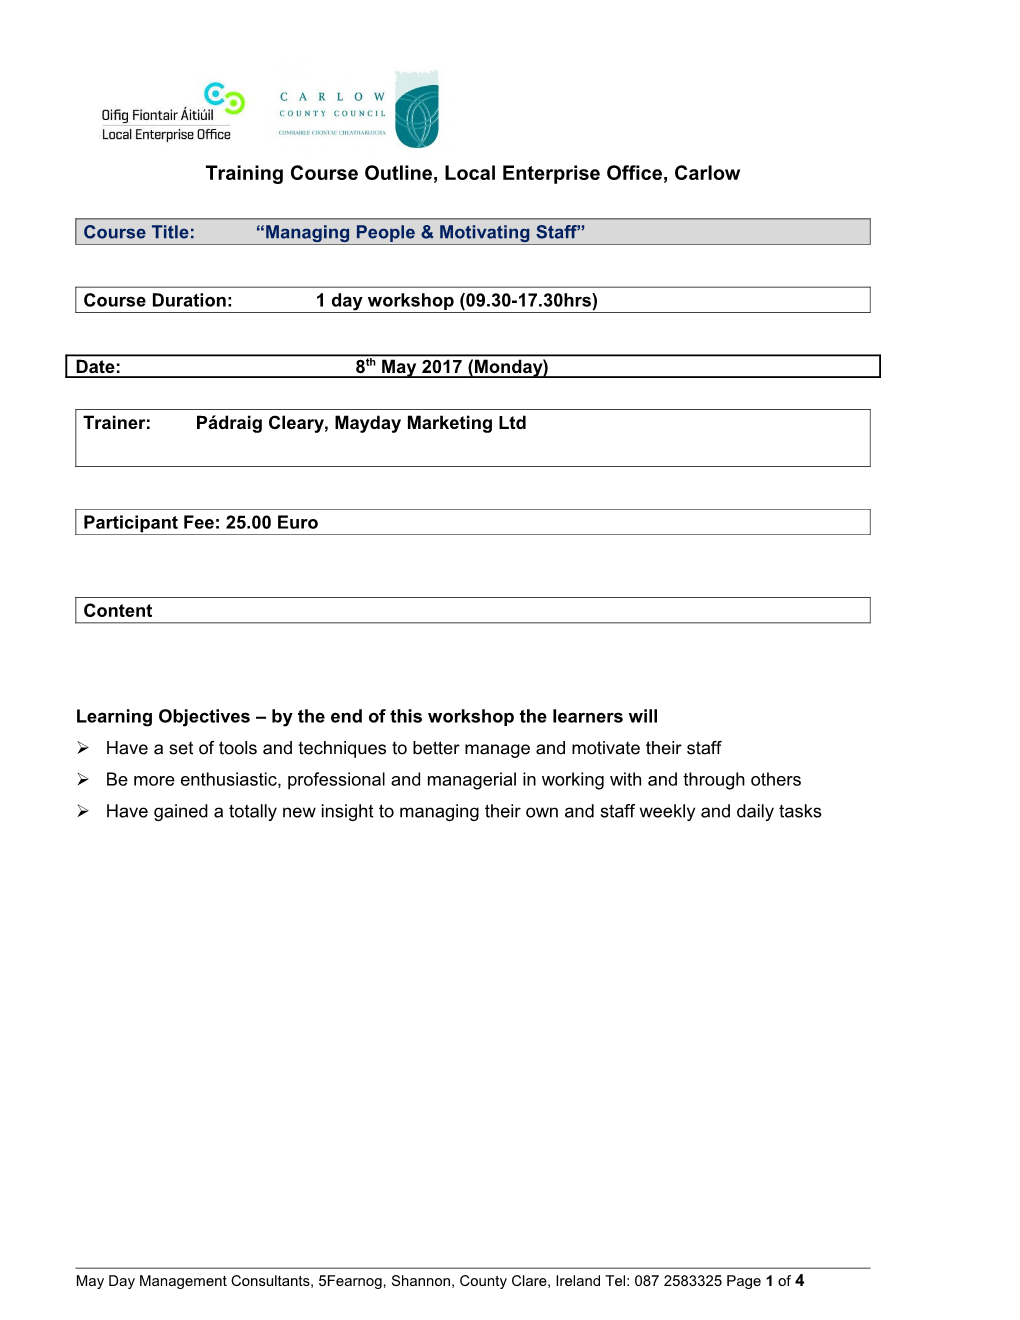 Training Course Outline, Local Enterprise Office, Carlow